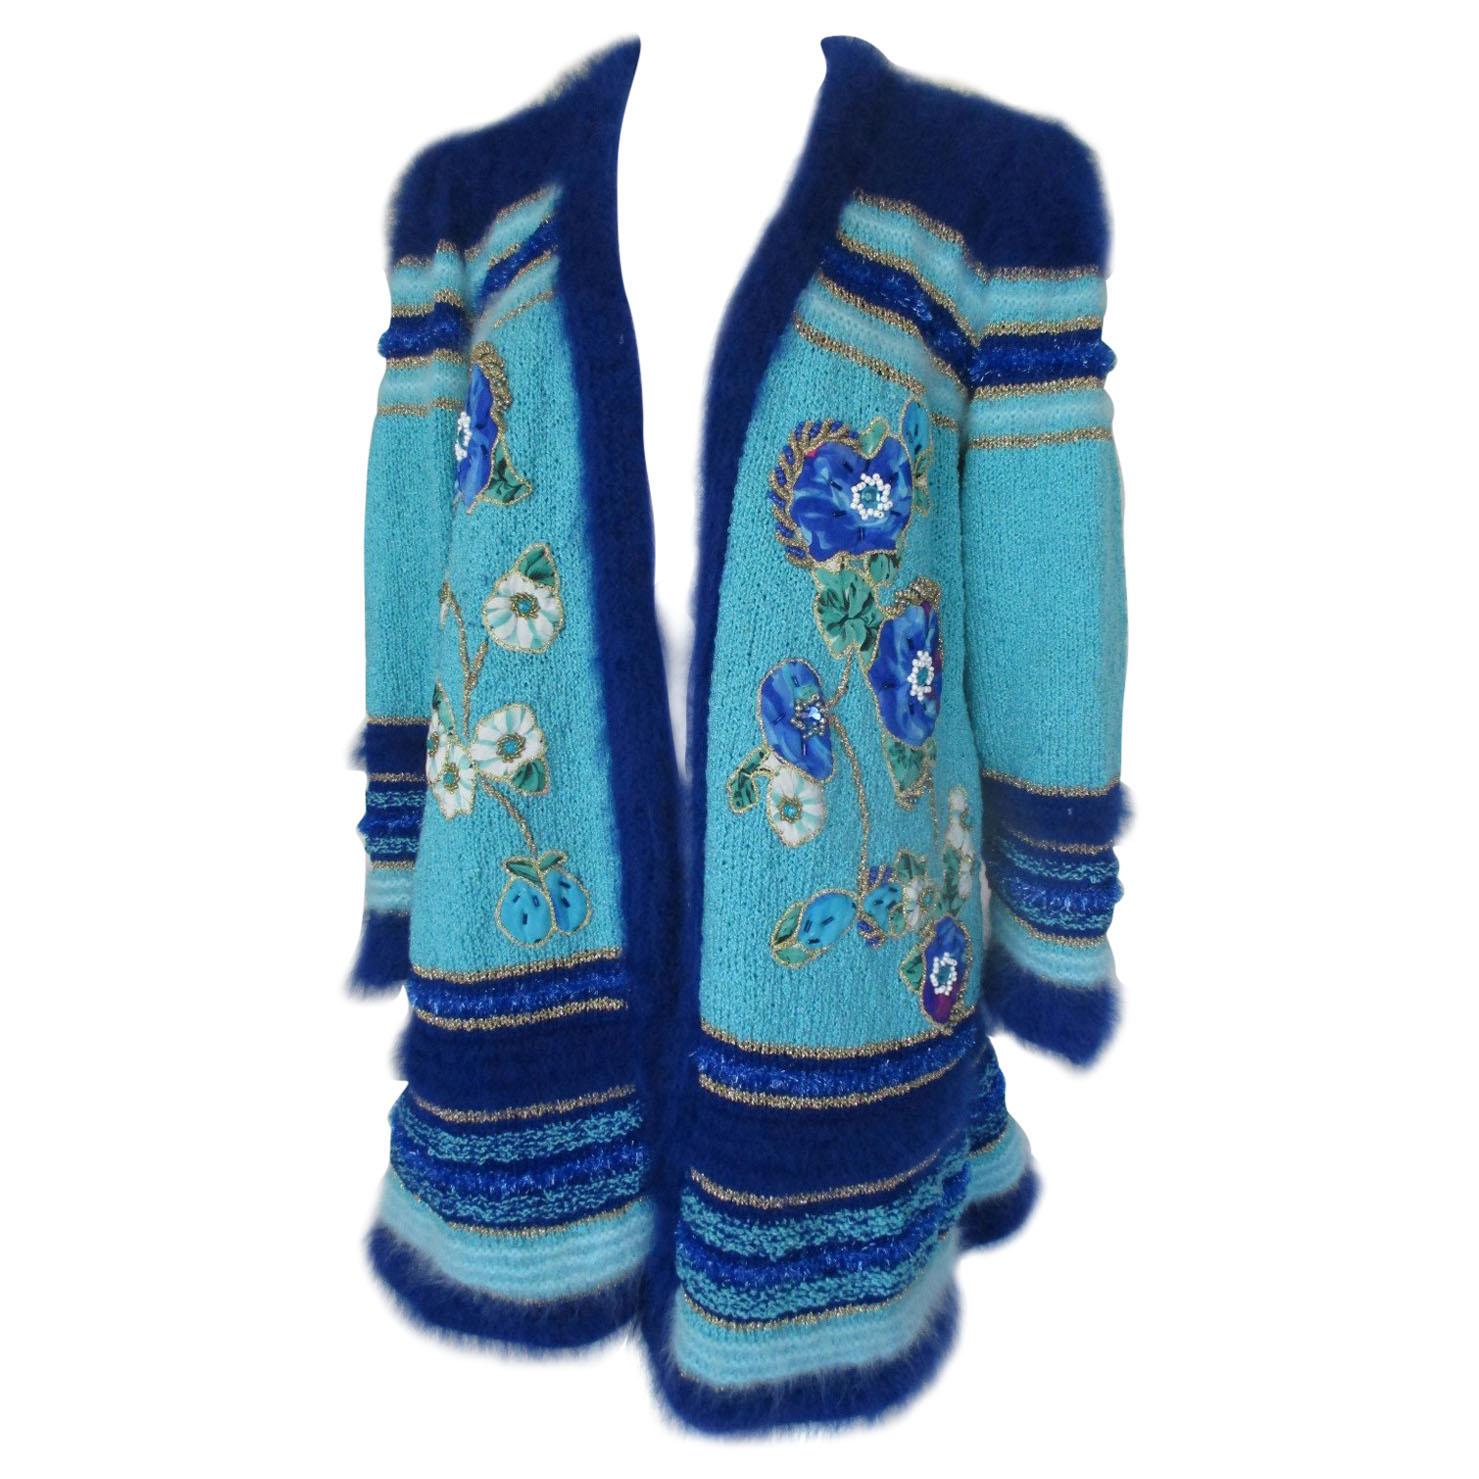 Turquoise coat with flower appliqués